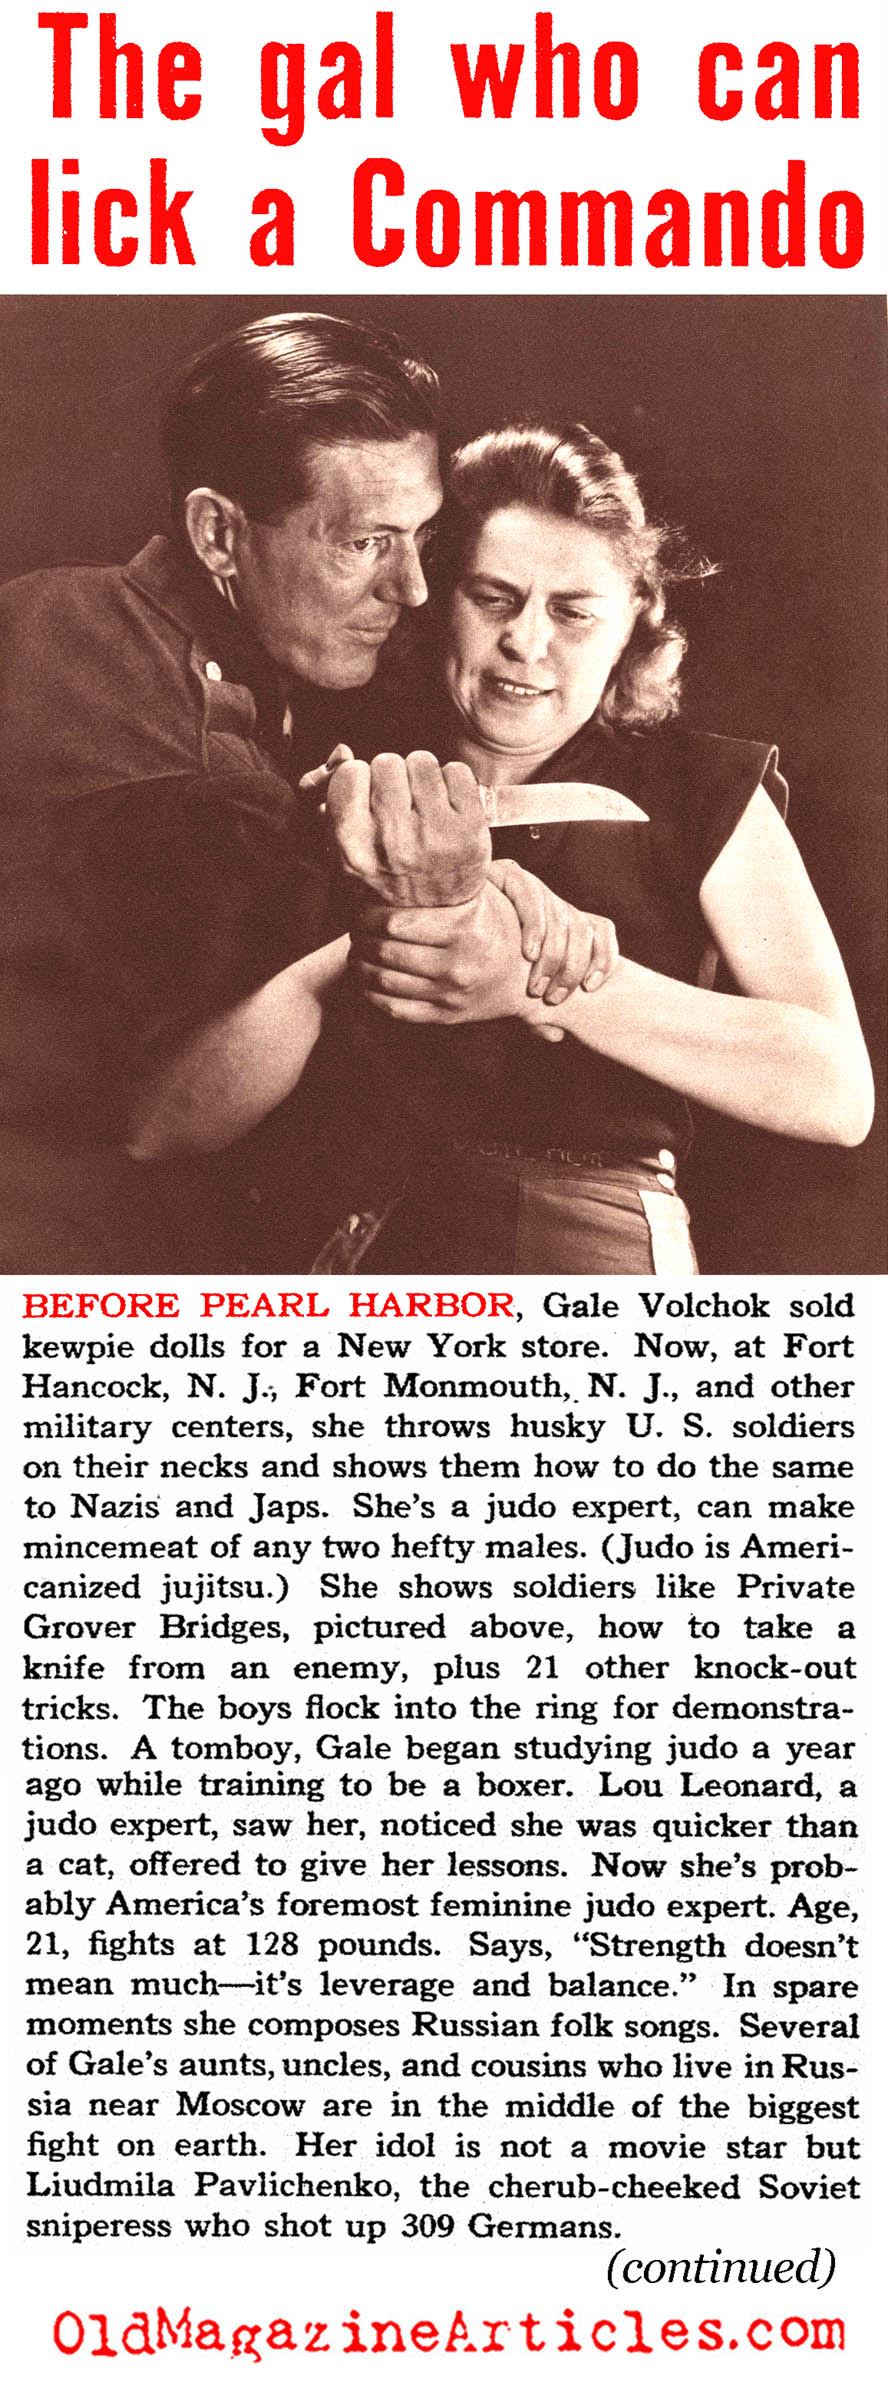 Badass (The American Magazine, 1943)